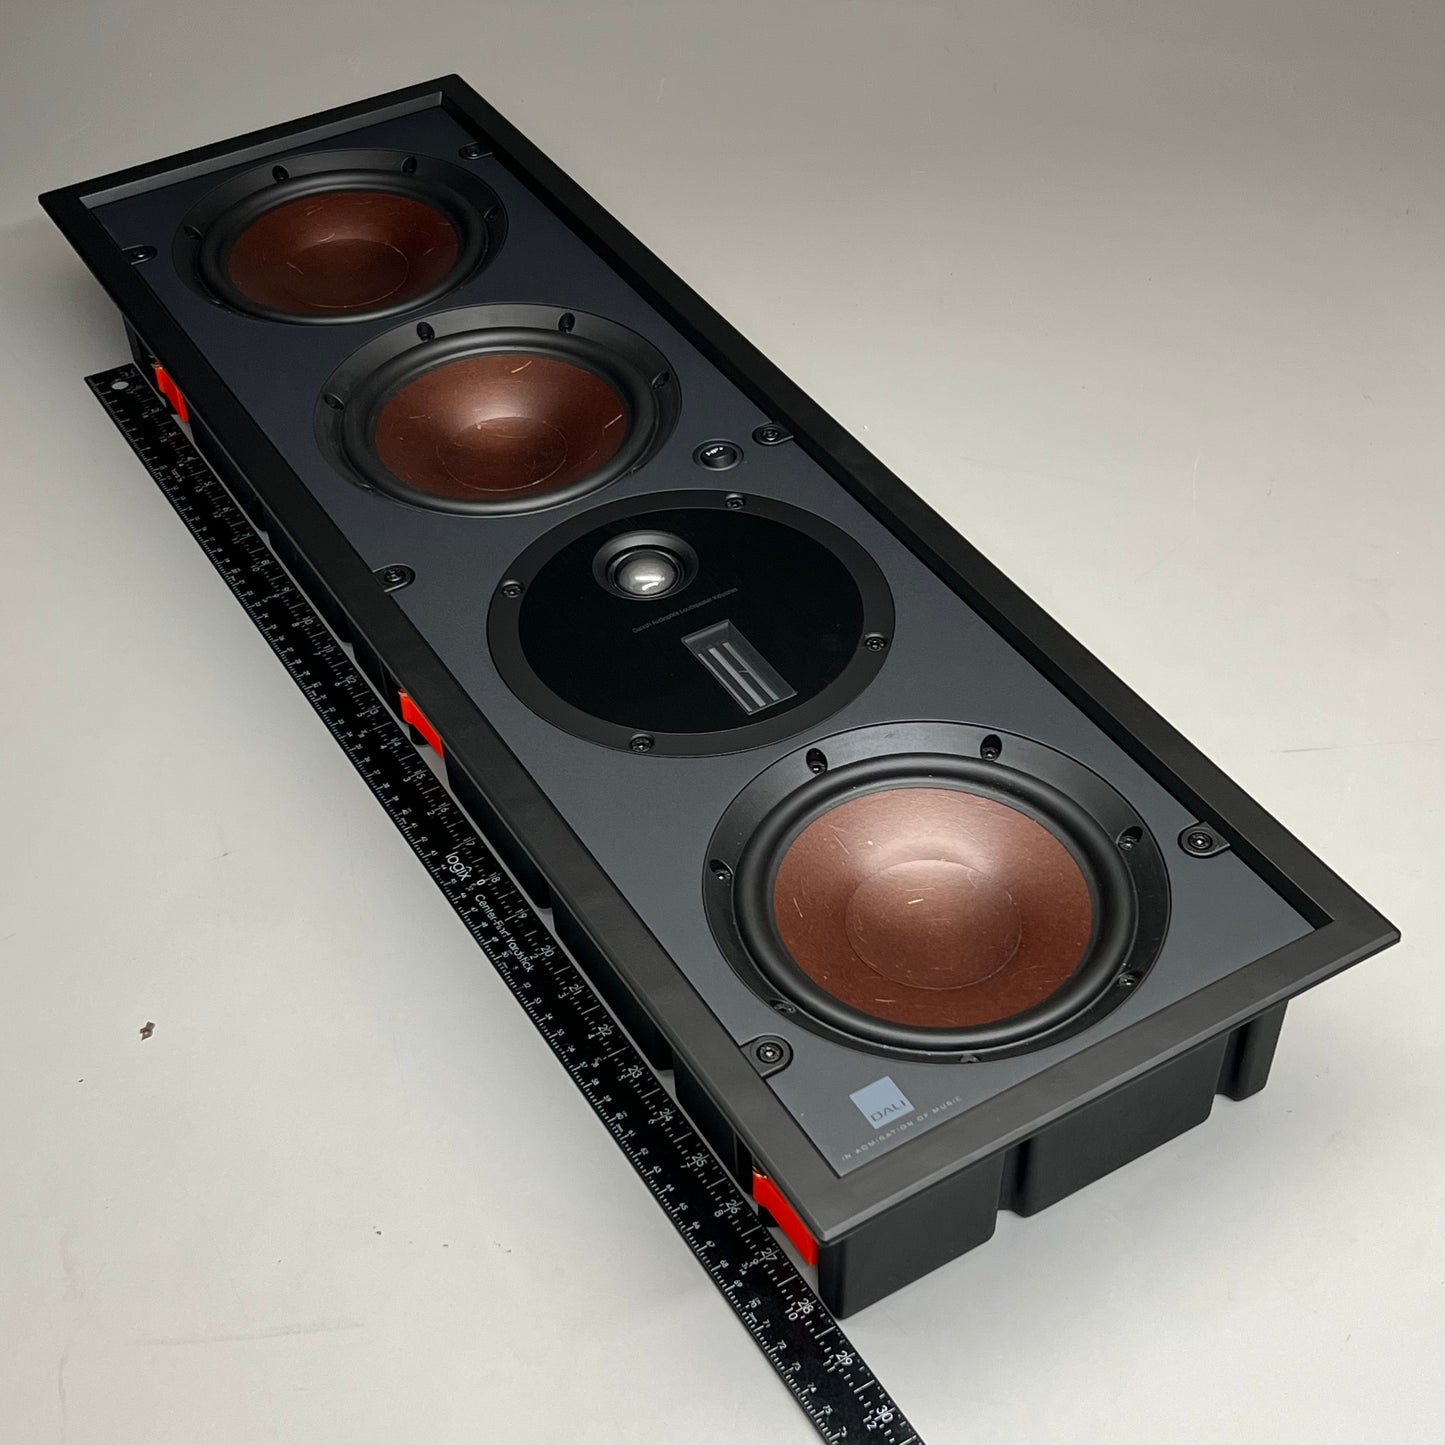 DALI PHANTOM In-Wall Speaker Danish Audiophile Loudspeaker IW M-375 (New)